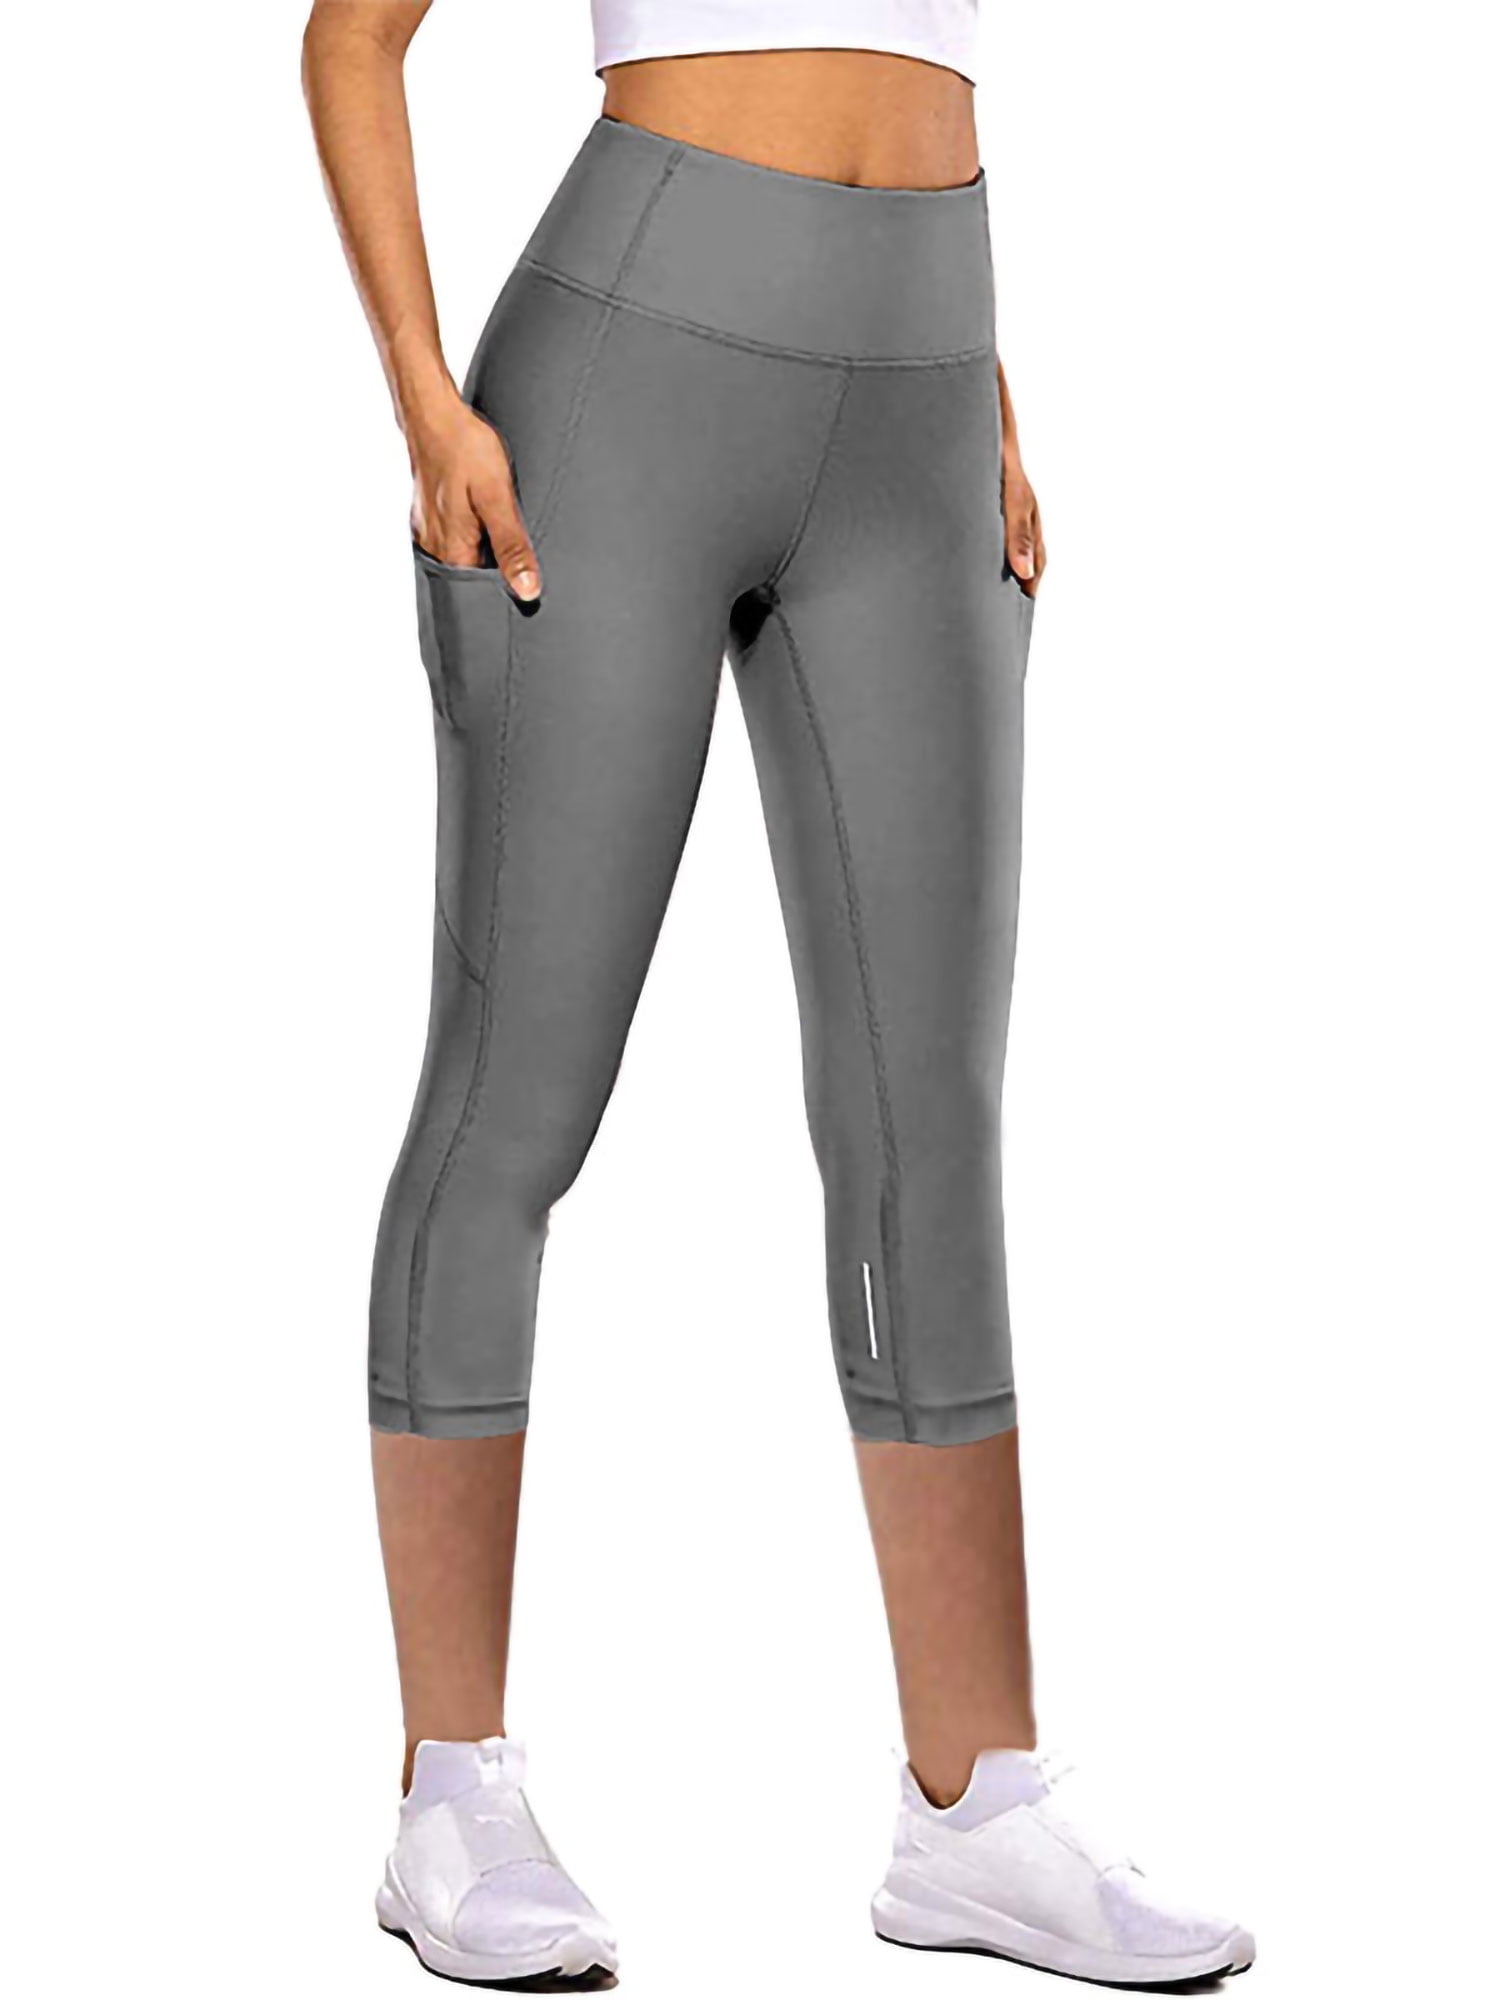 Sports Ladies Cropped Pants 3Quarter Leggings Running Yoga Fitness Gym Bottoms 